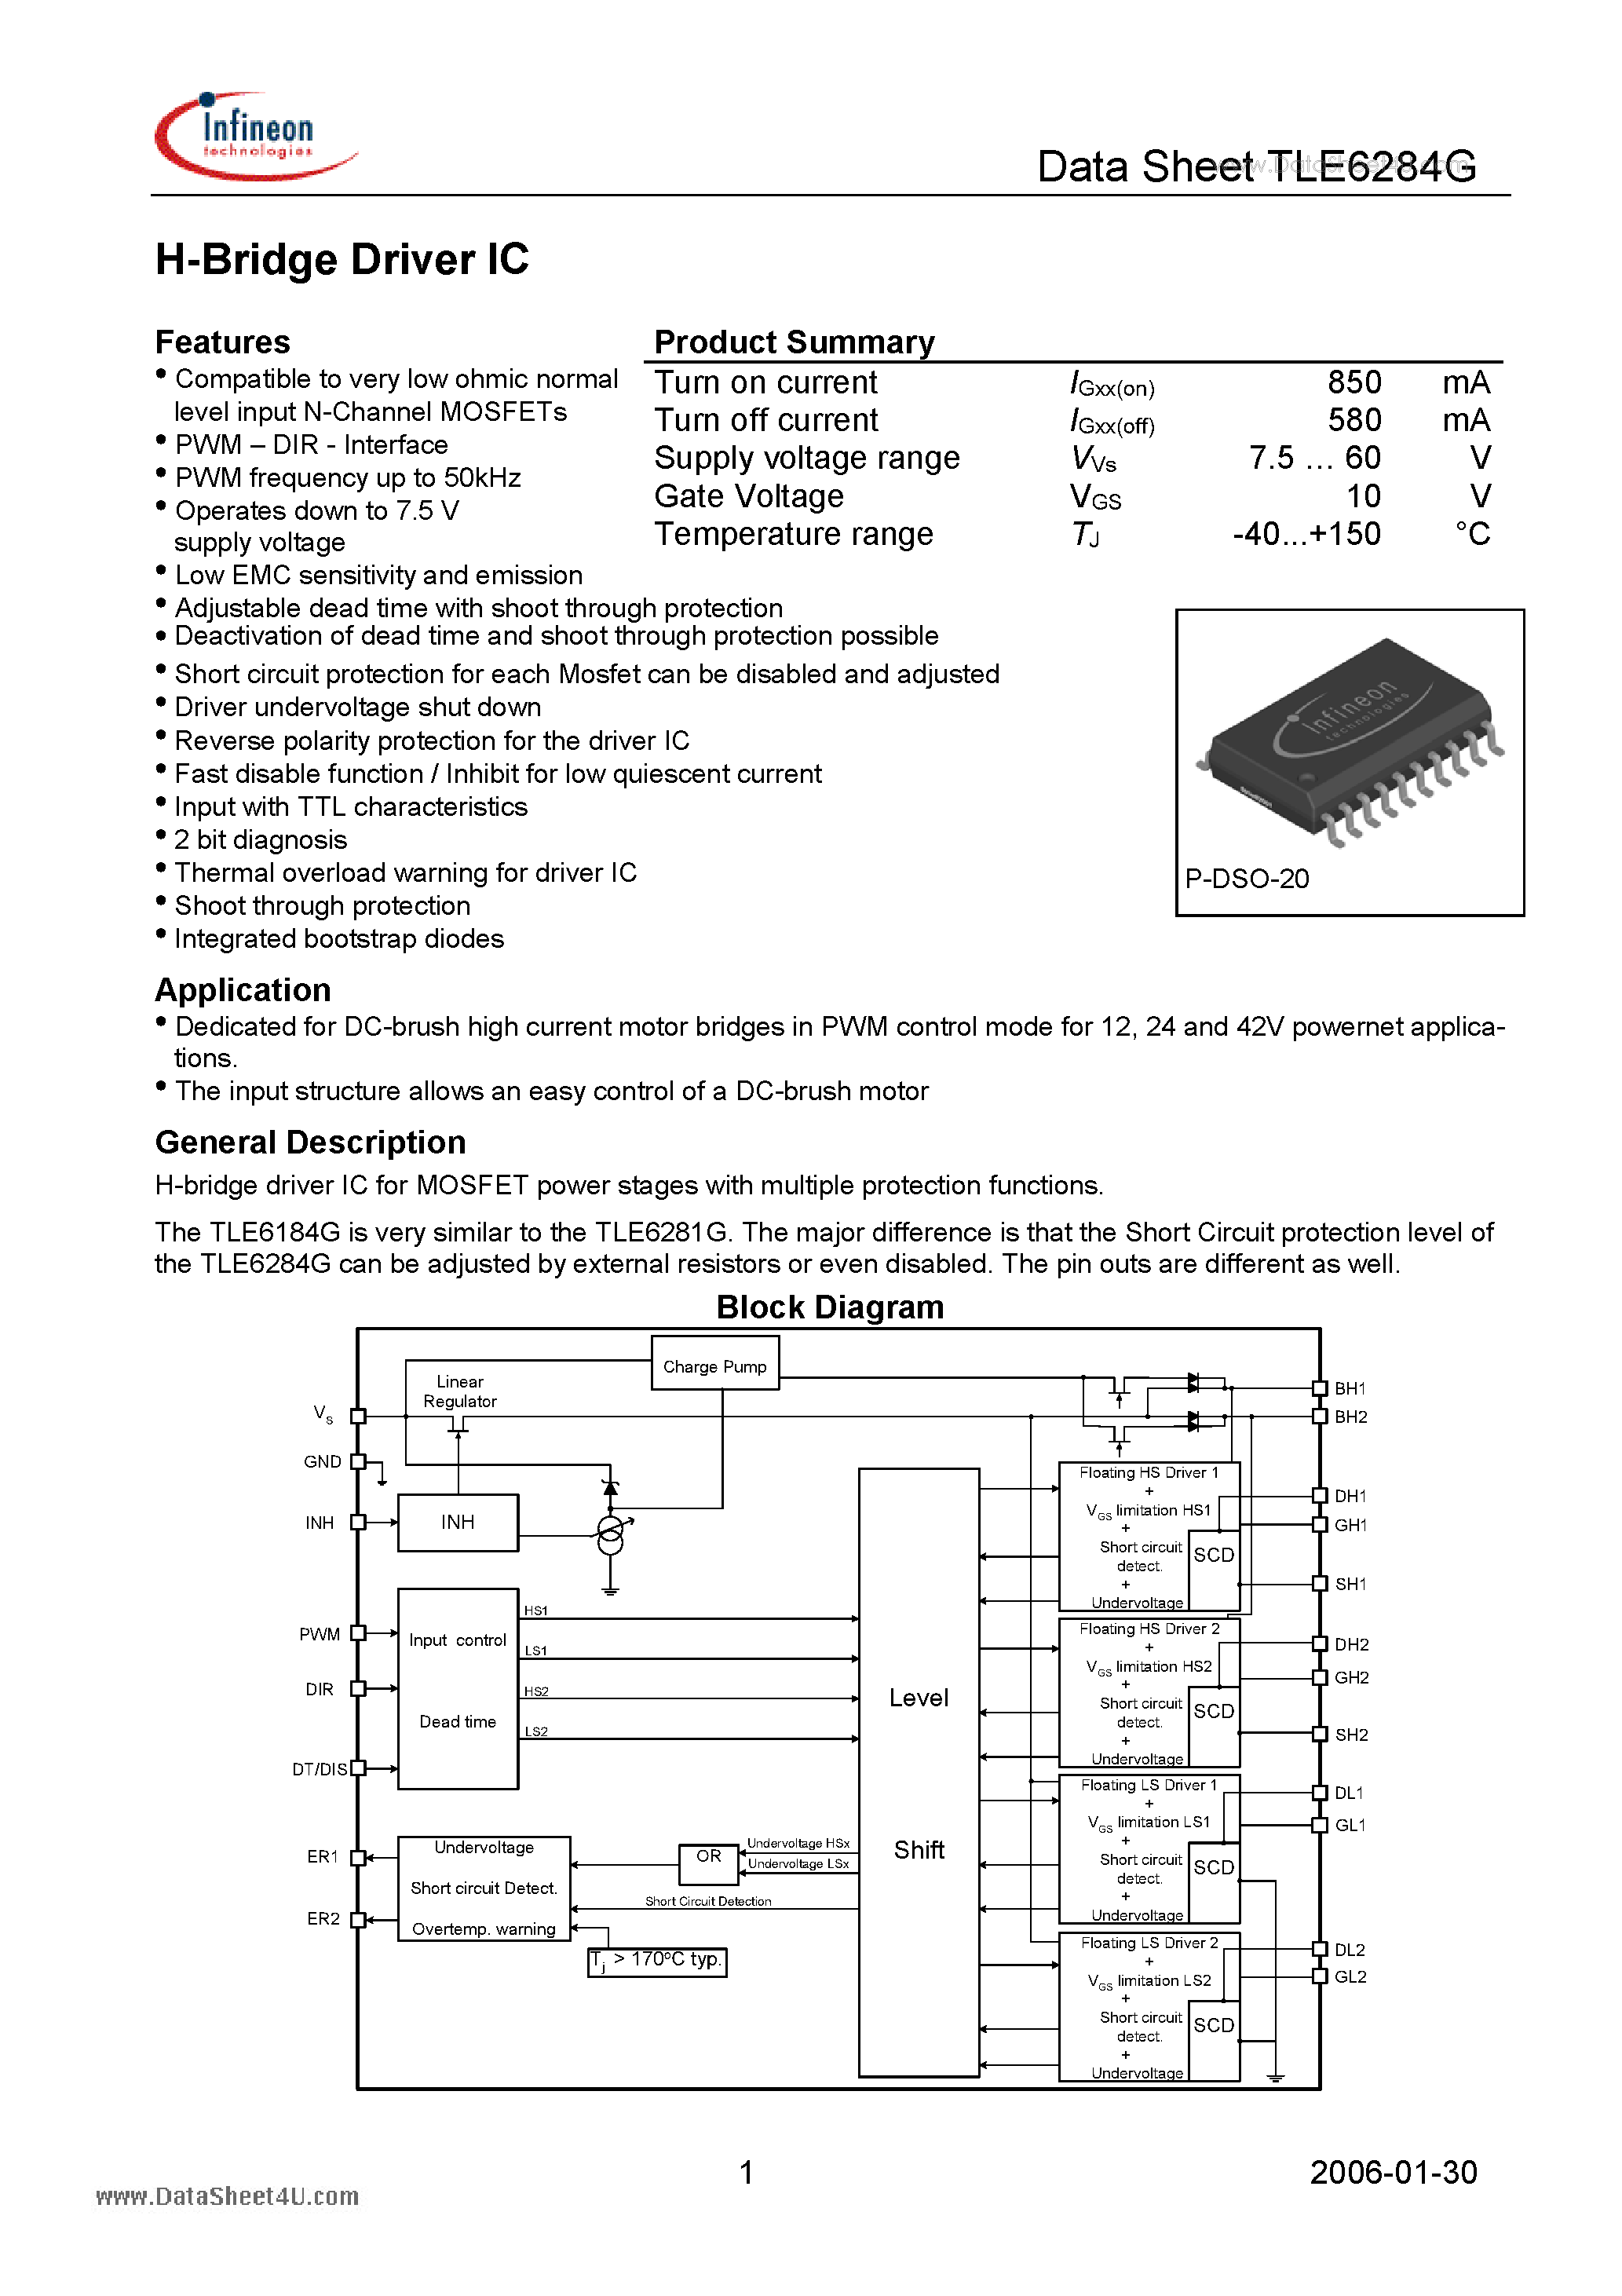 Datasheet TLE6284G - H-Bridge Driver IC page 1